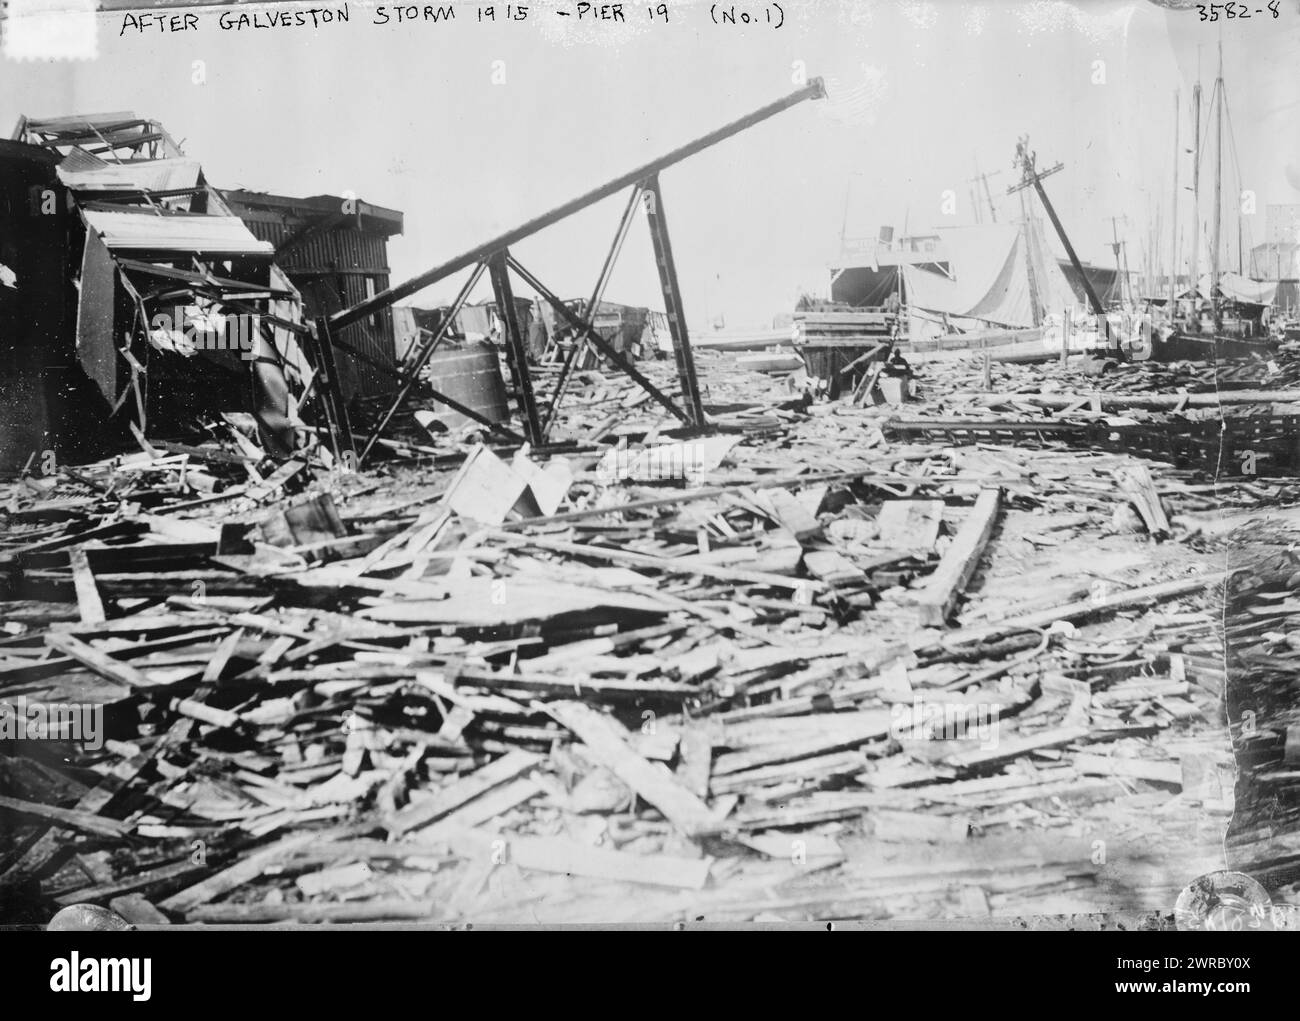 After Galveston Storm, 1915, Pier 19 (No. 1), Photograph shows aftermath of the 1915 Galveston Hurricane., 1915., Glass negatives, 1 negative: glass Stock Photo